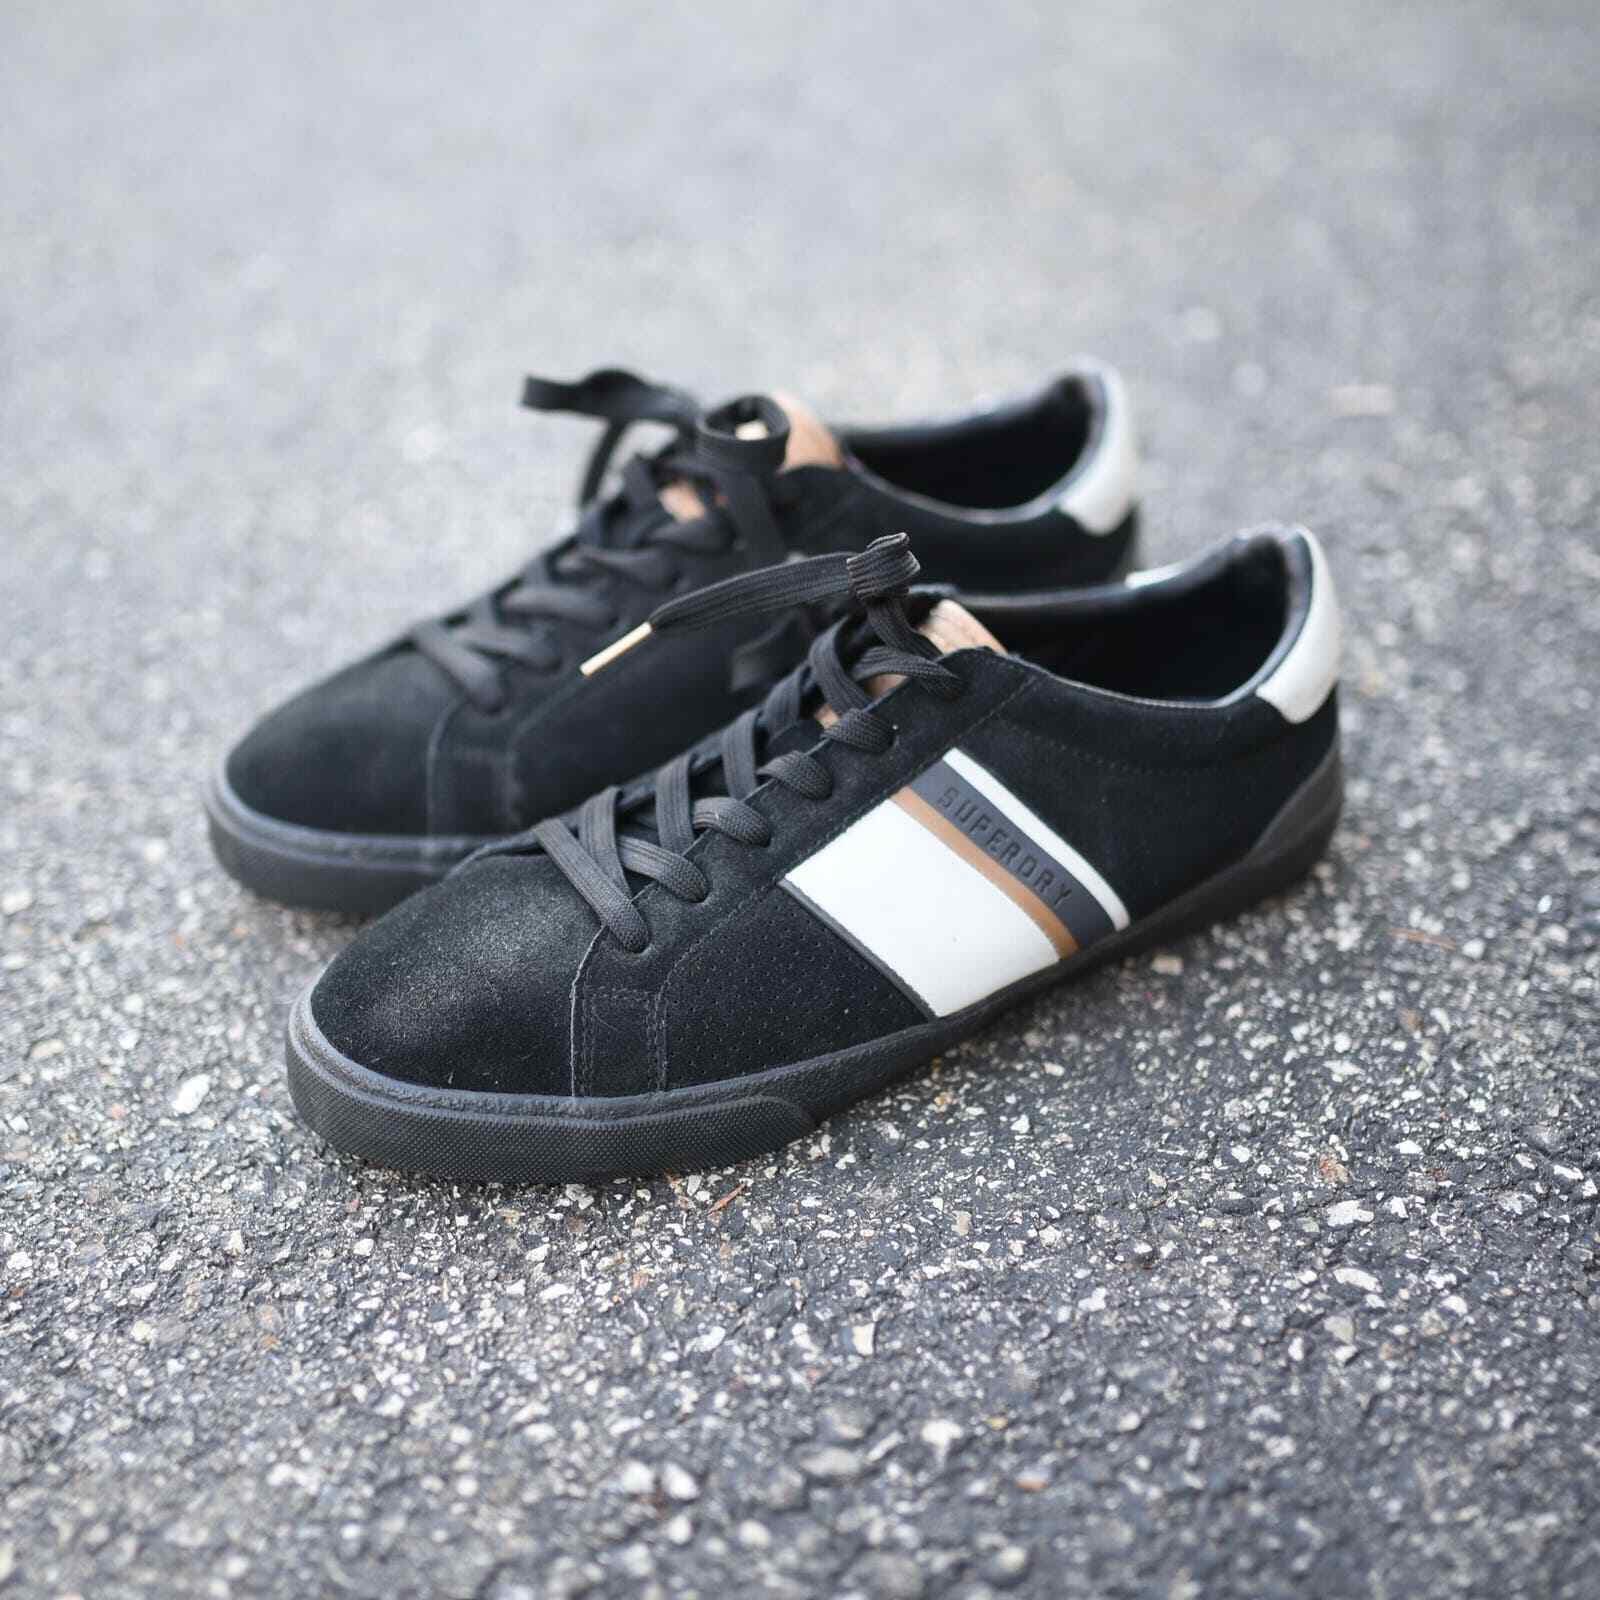 NWOT Black Leather Superdry Men\'s Vintage Court Trainer Sneakers size 11 